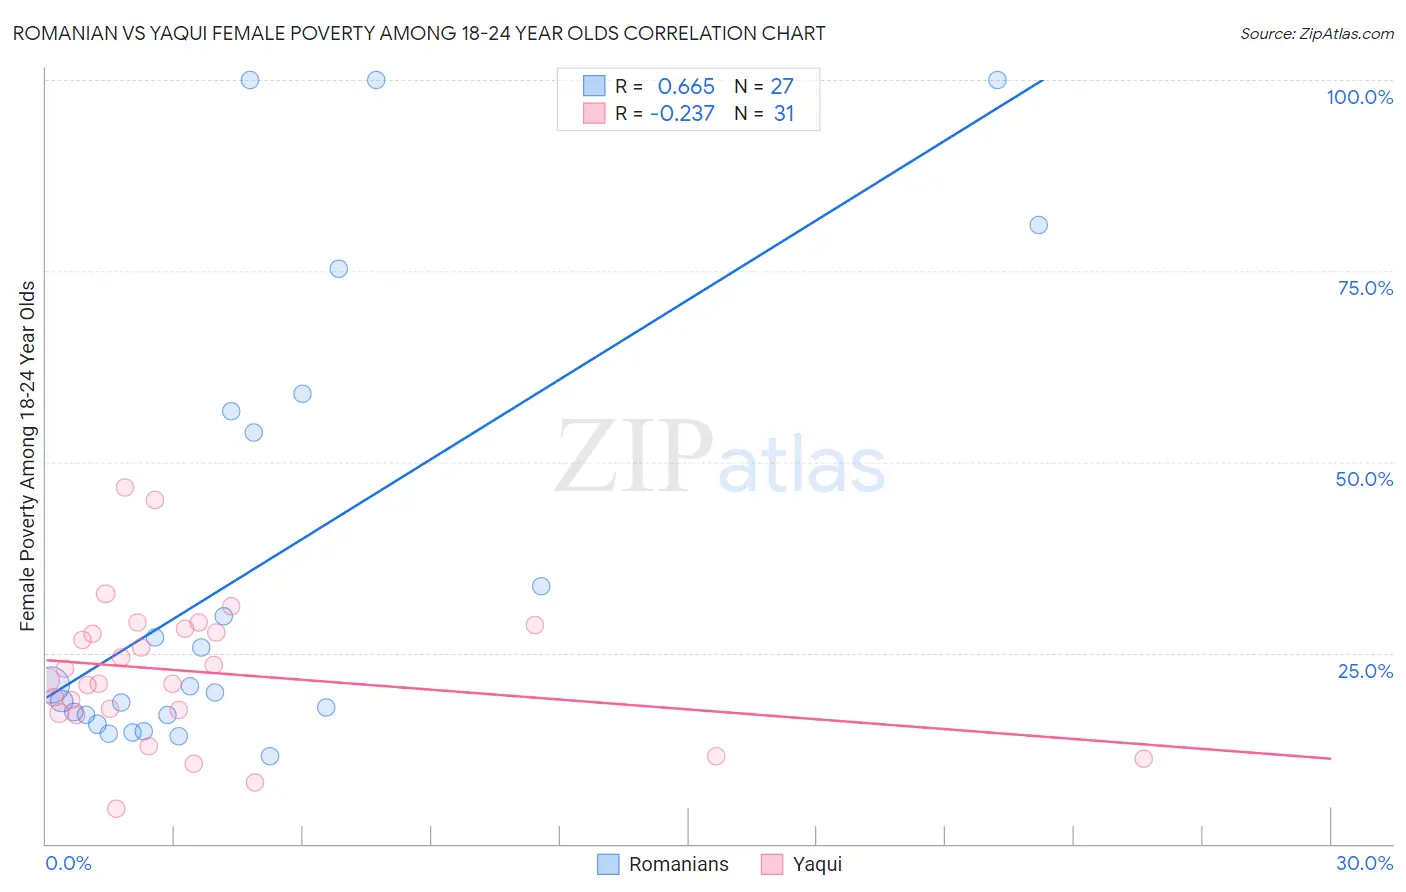 Romanian vs Yaqui Female Poverty Among 18-24 Year Olds